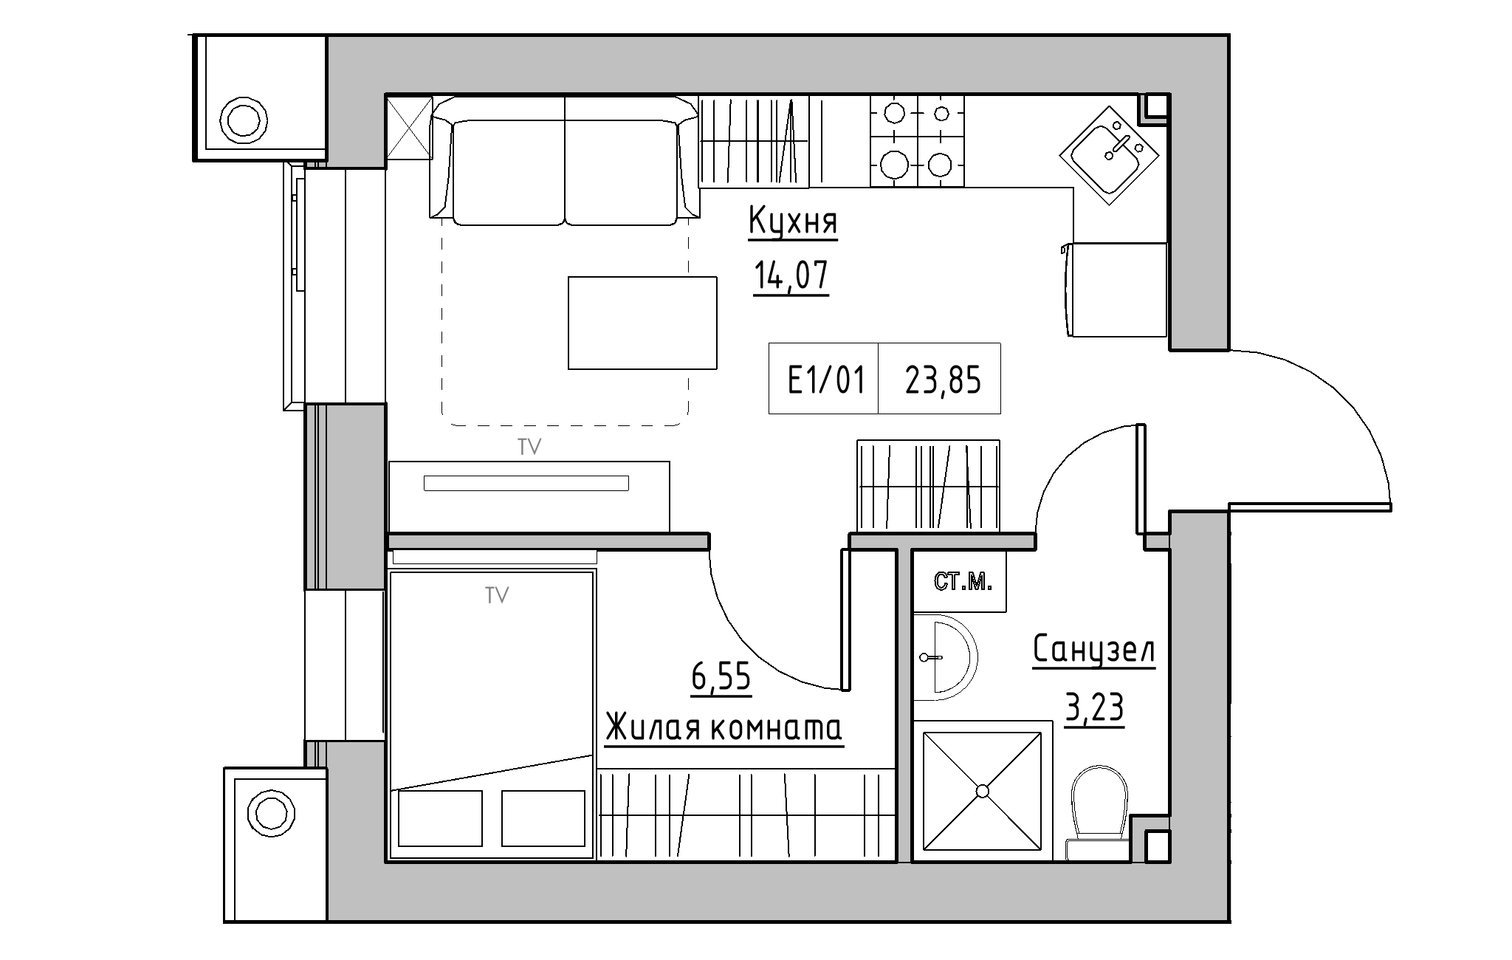 Planning 1-rm flats area 23.85m2, KS-013-04/0003.